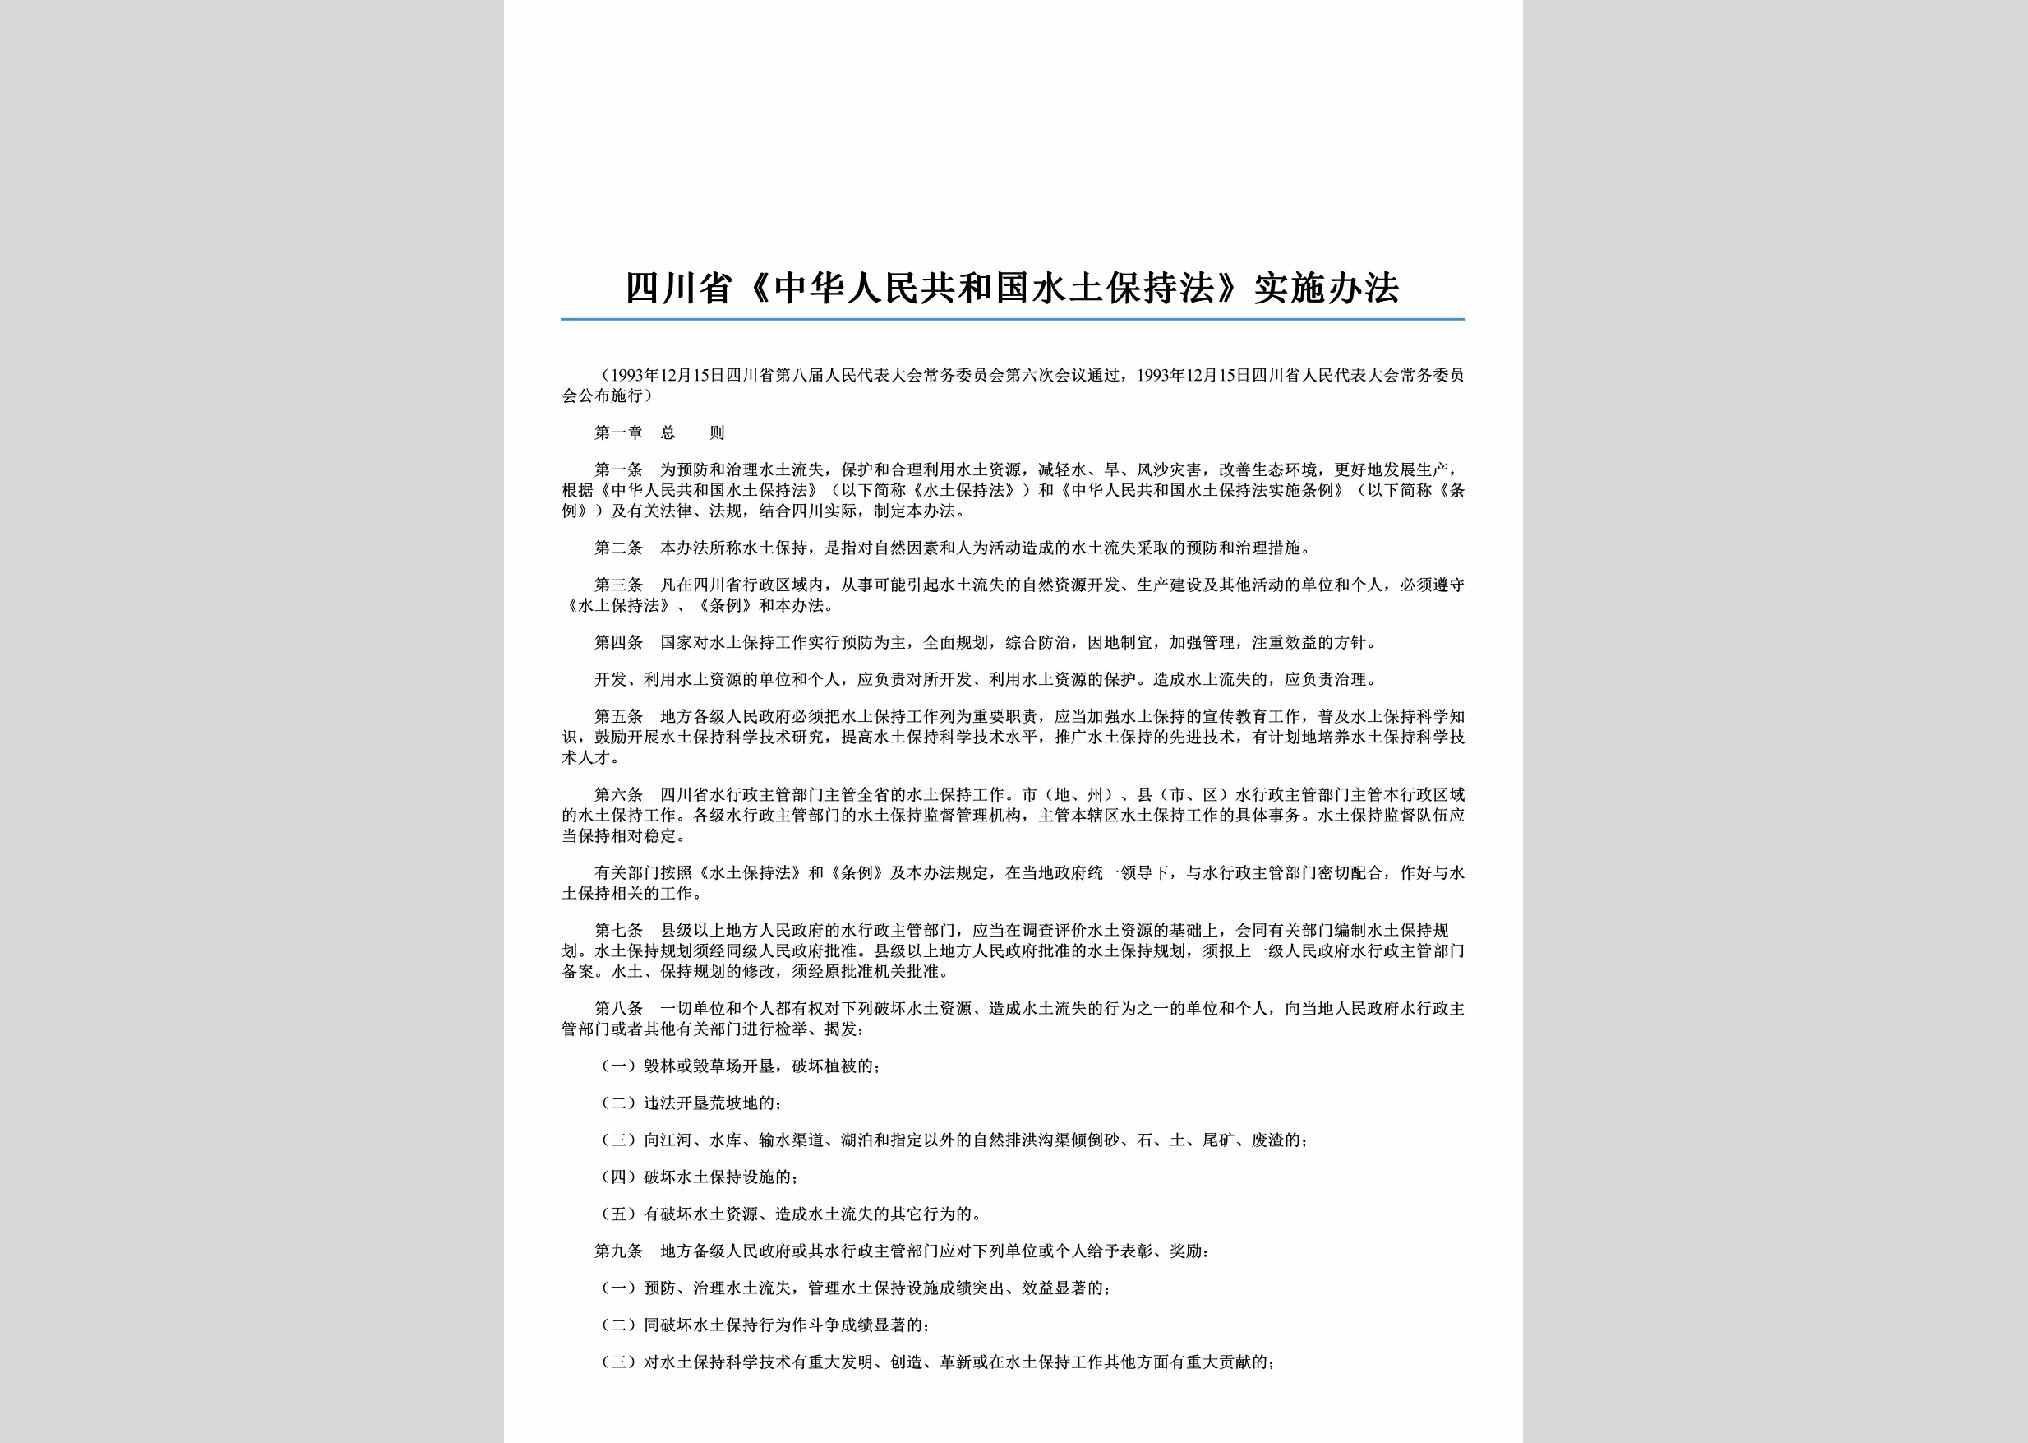 SC-STBCSSBF-2006：四川省《中华人民共和国水土保持法》实施办法